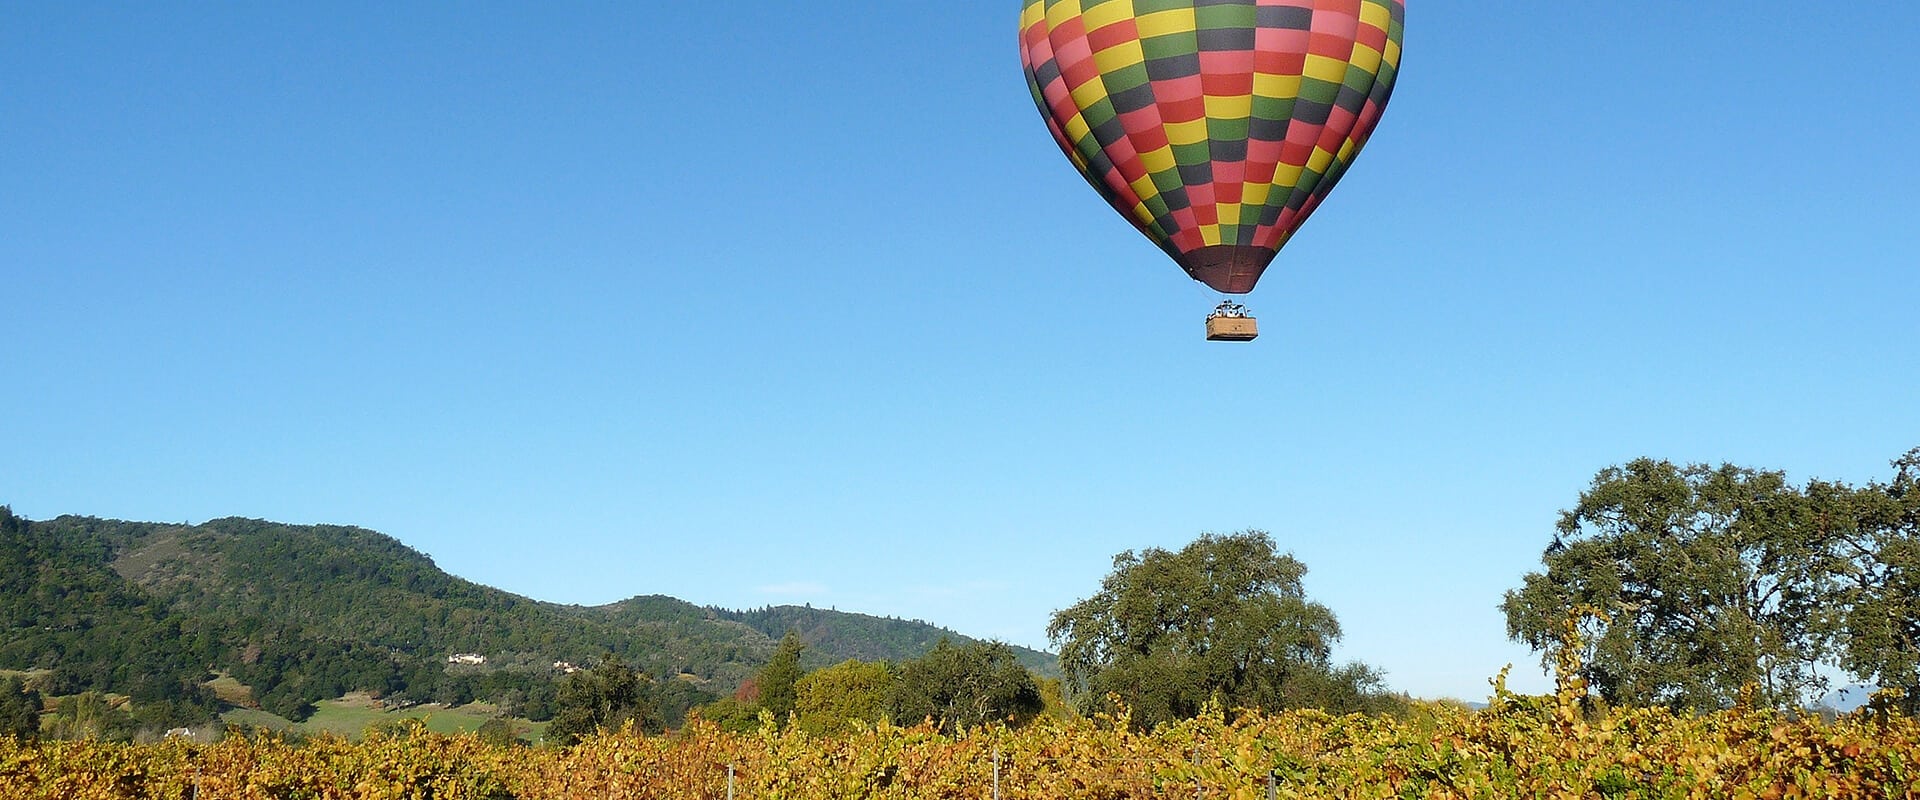 Hot Air Ballooning Winelands